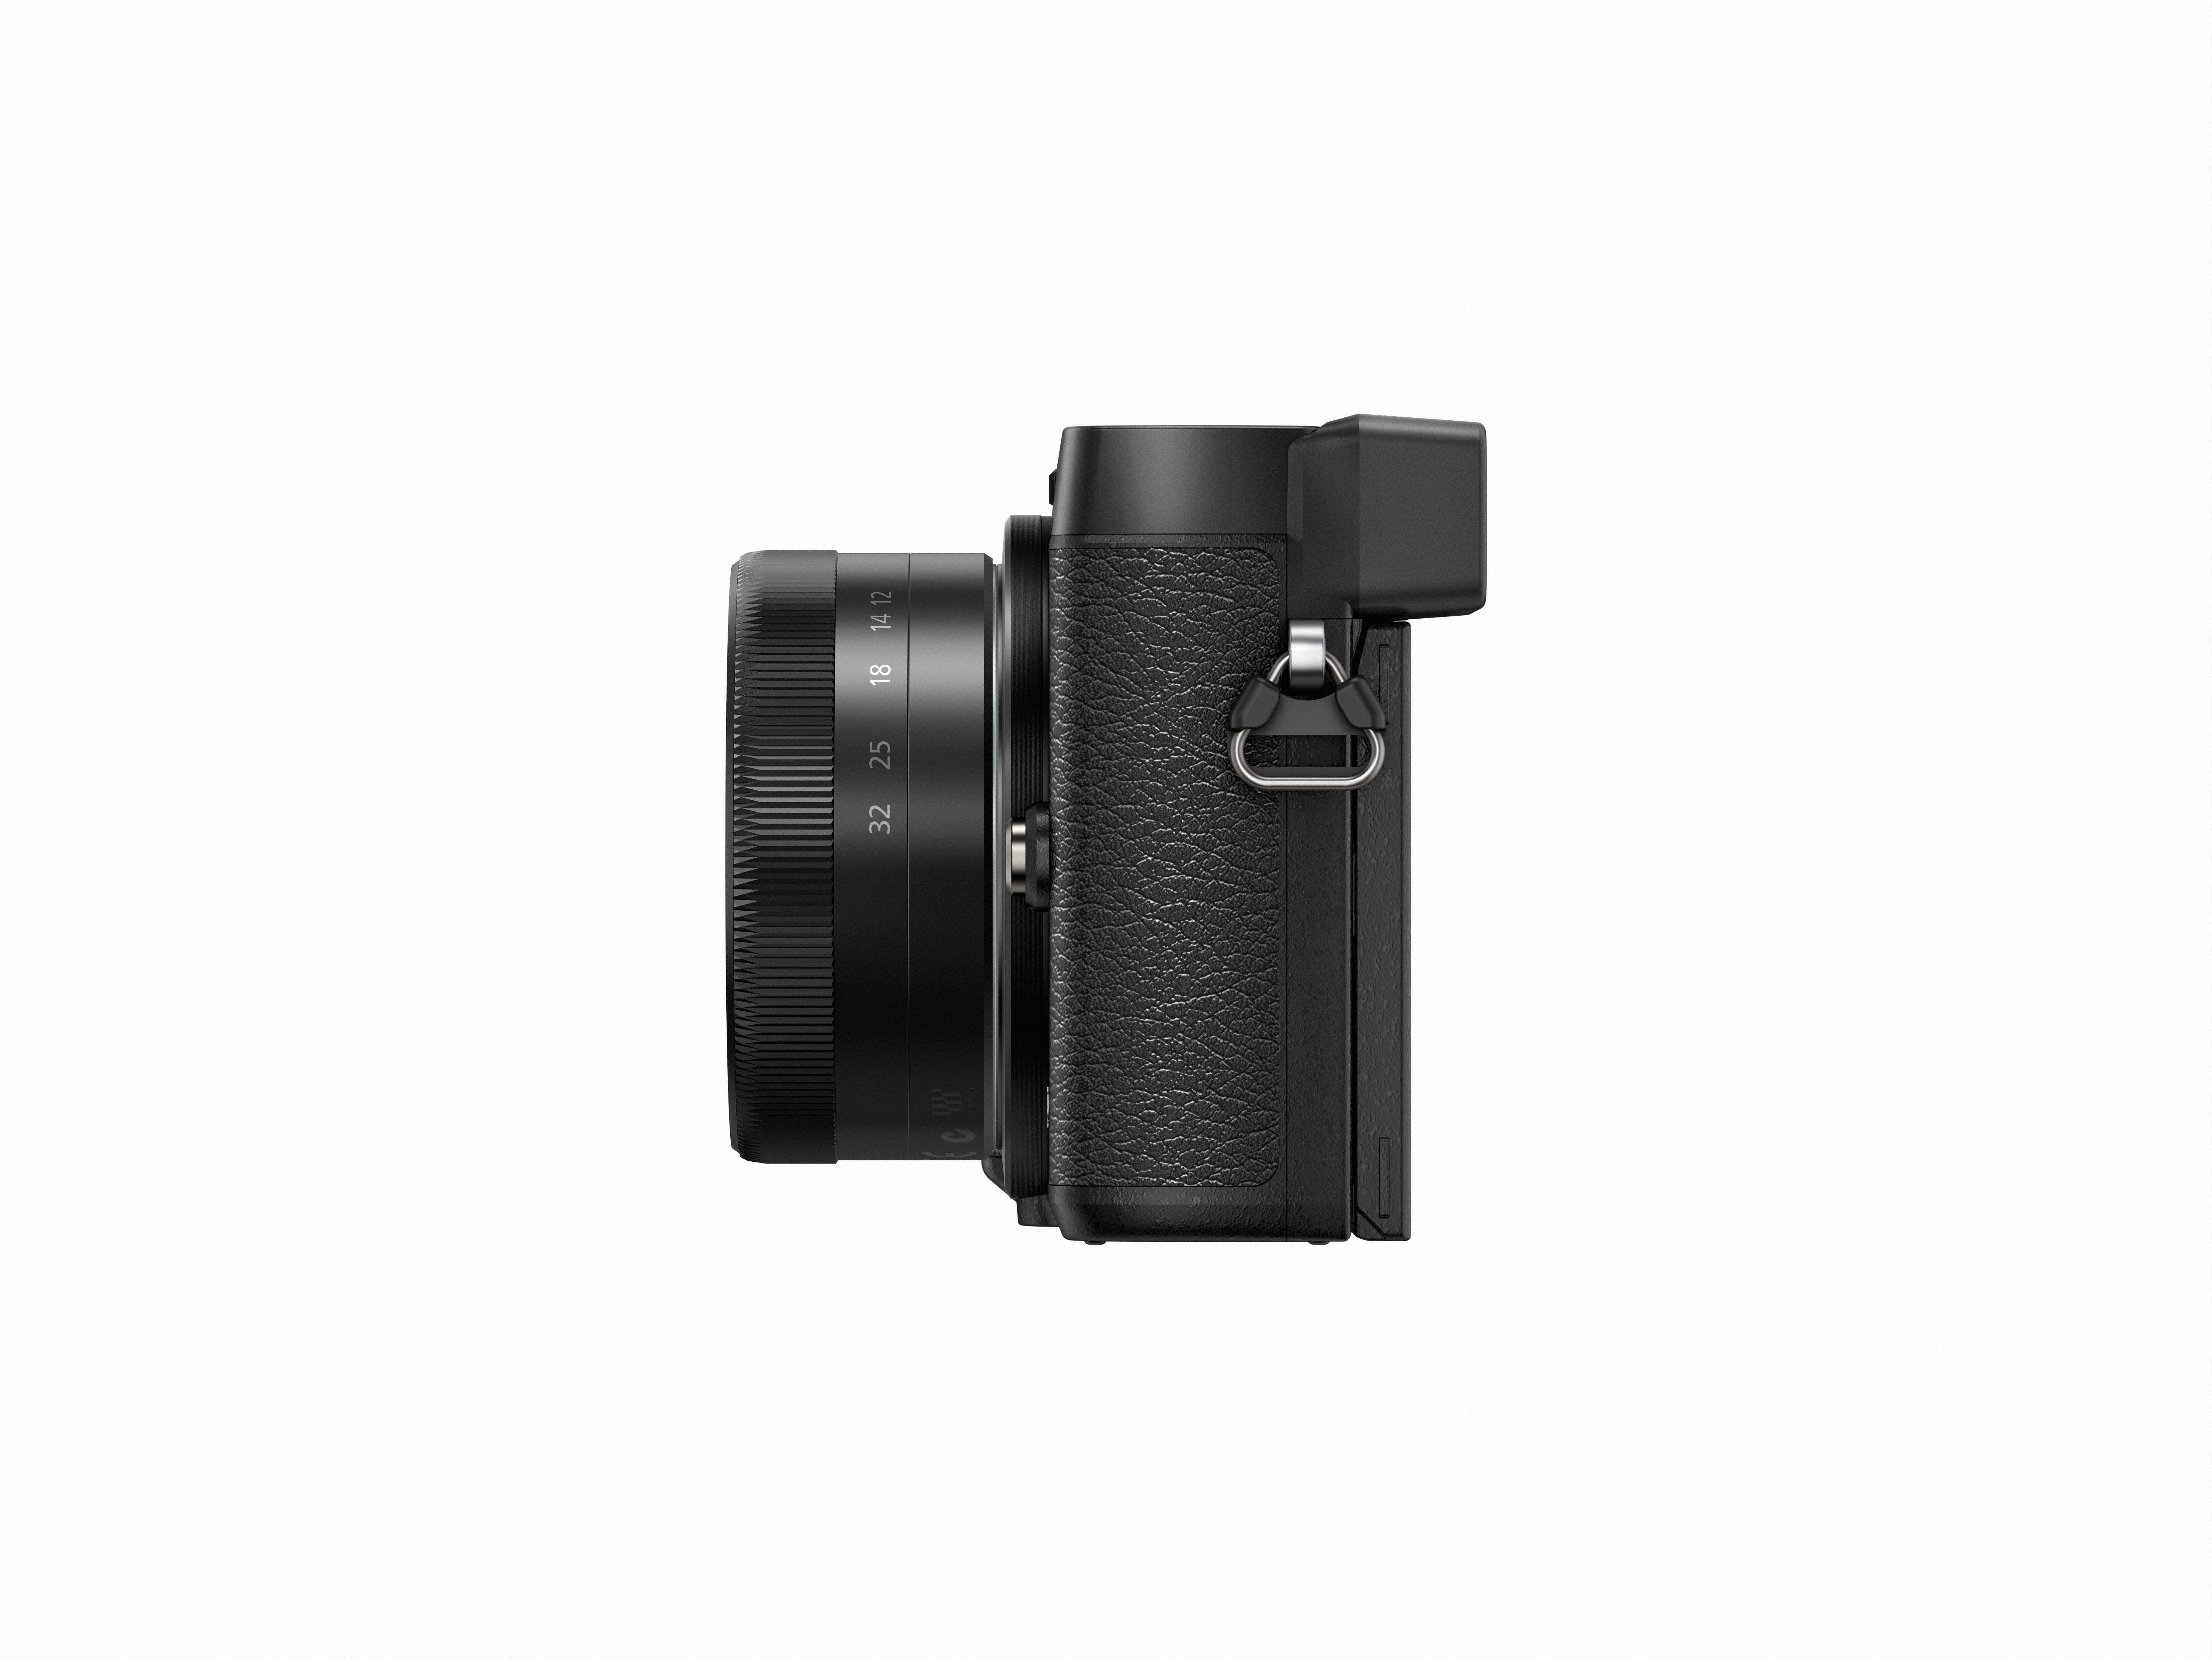 , Lumix Systemkamera mm DMC-GX80K WLAN cm Objektiv PANASONIC 12-32 mit Display 7,5 Touchscreen,